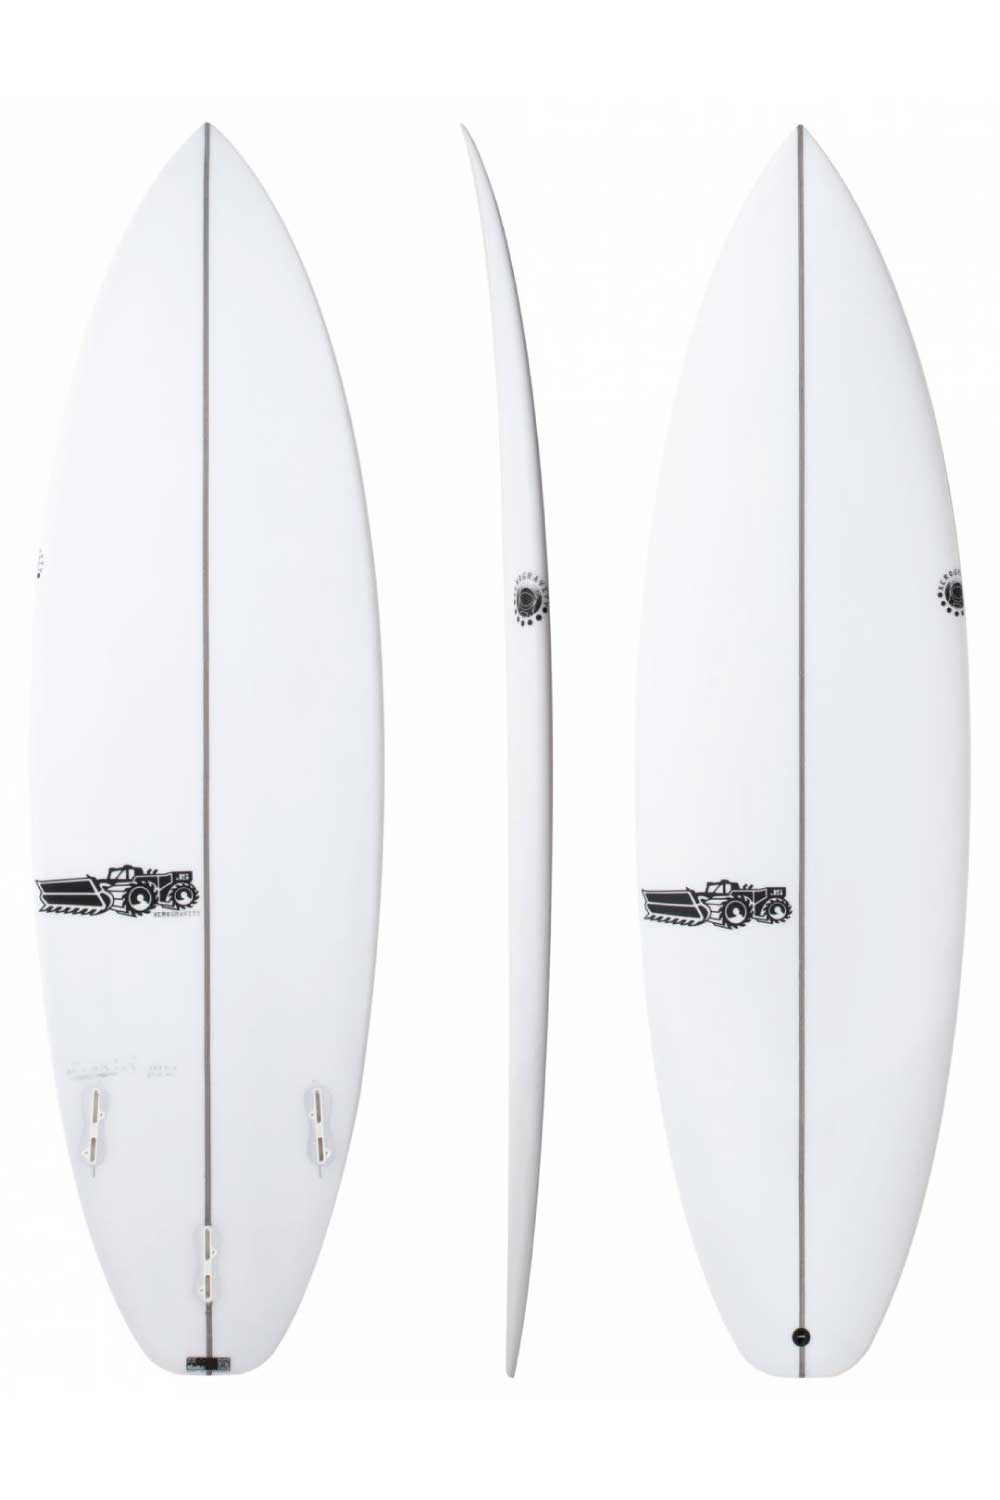 JS Industries XERO GRAVITY PU Squash Tail Surfboard